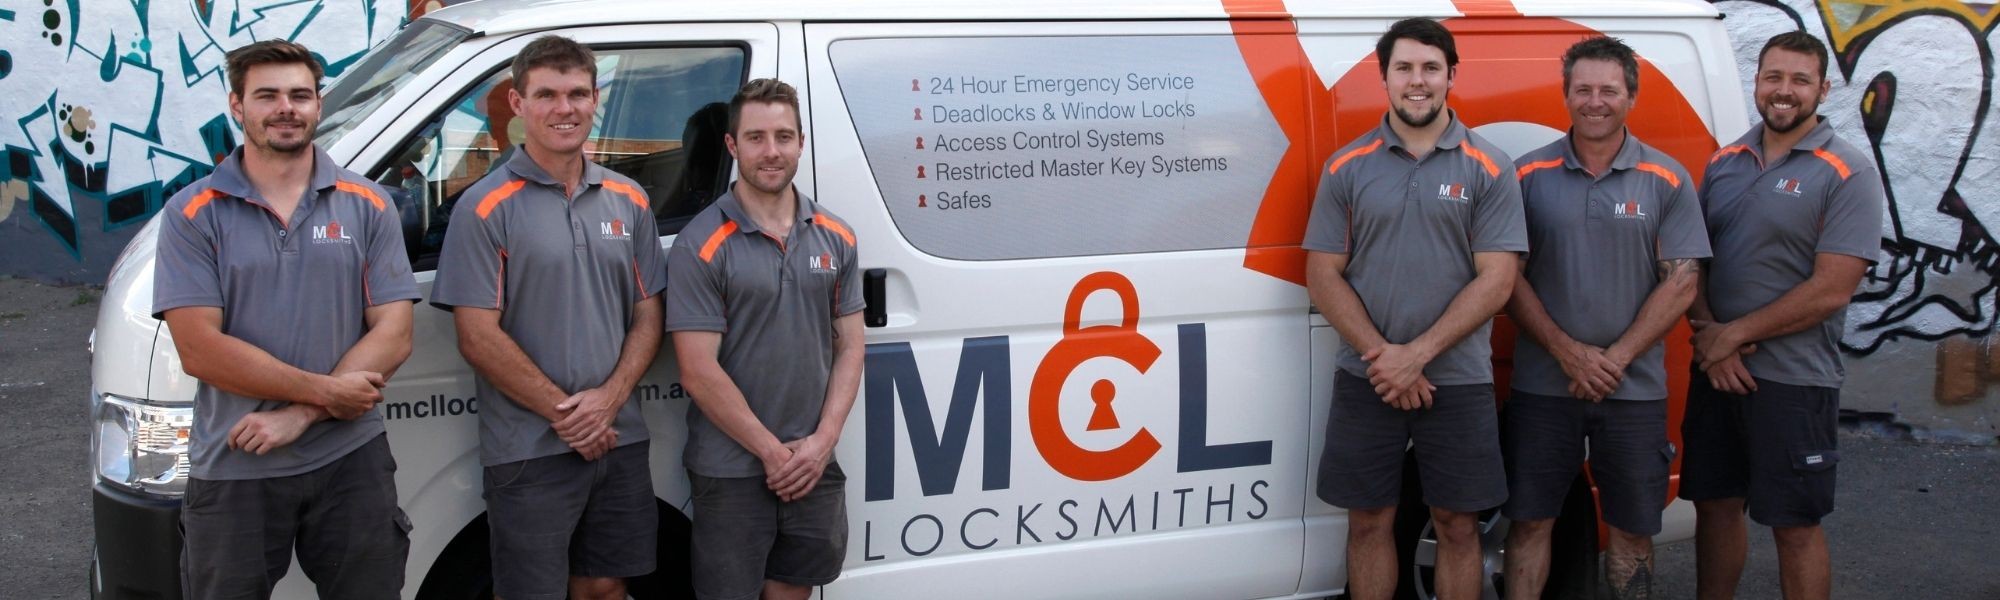  mcl-locksmiths-team